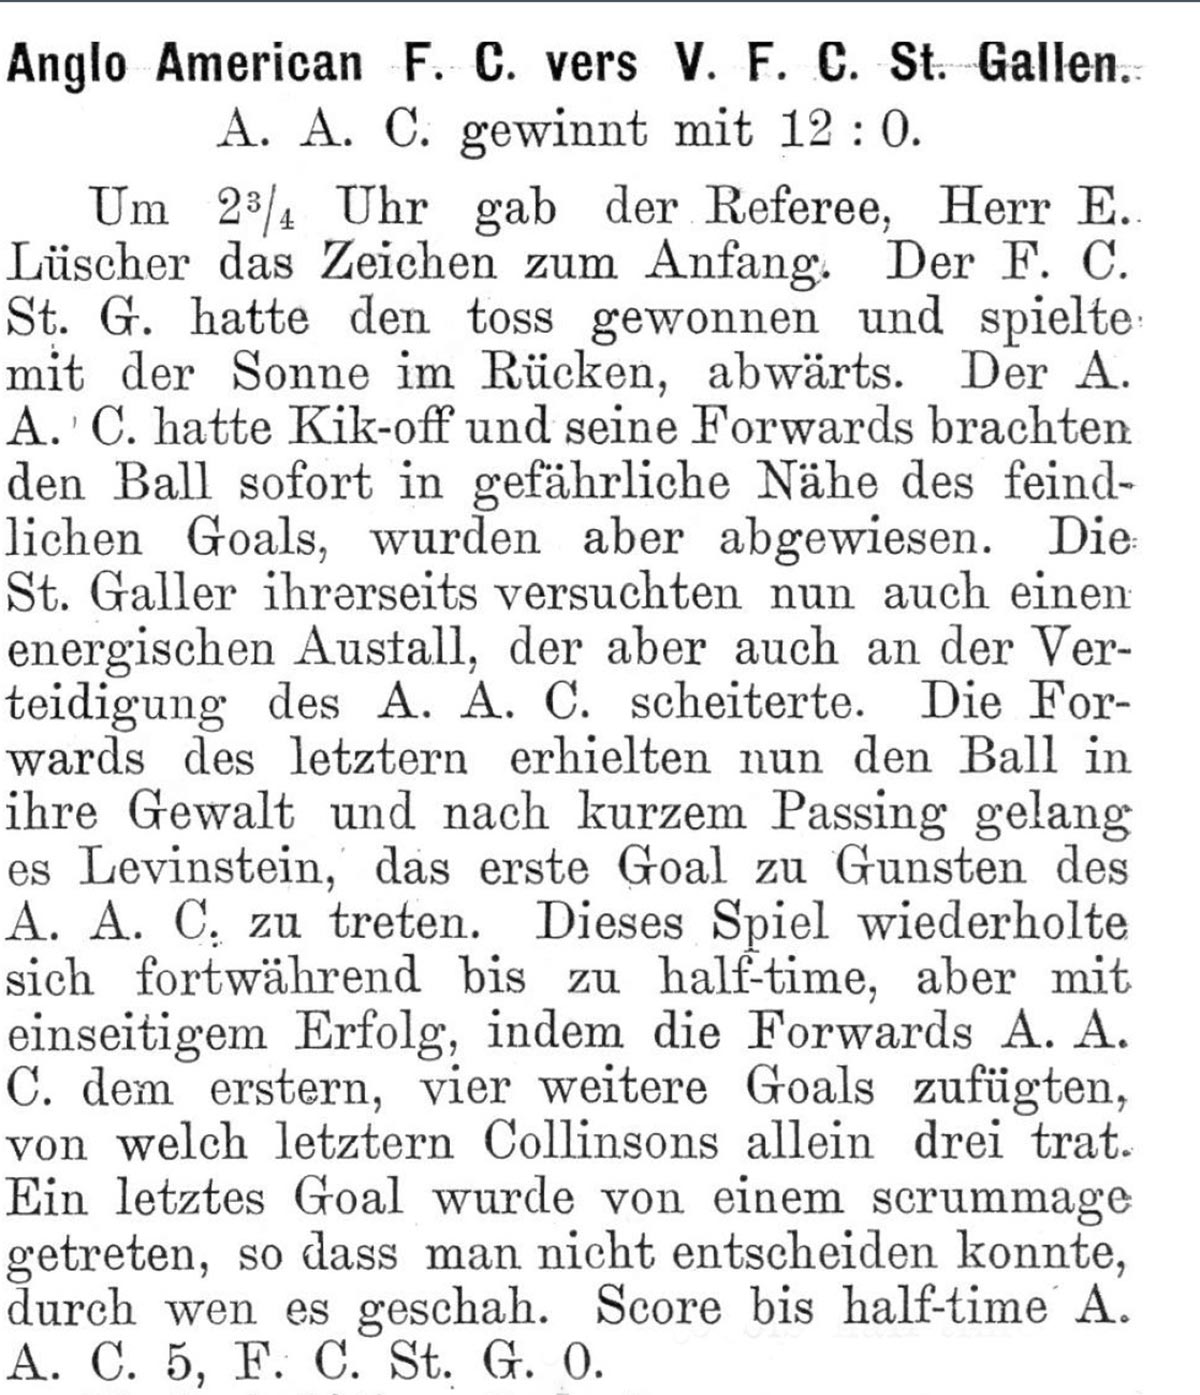 Anglicisms galore: an article from the Schweizer Sportblatt, November 1898.